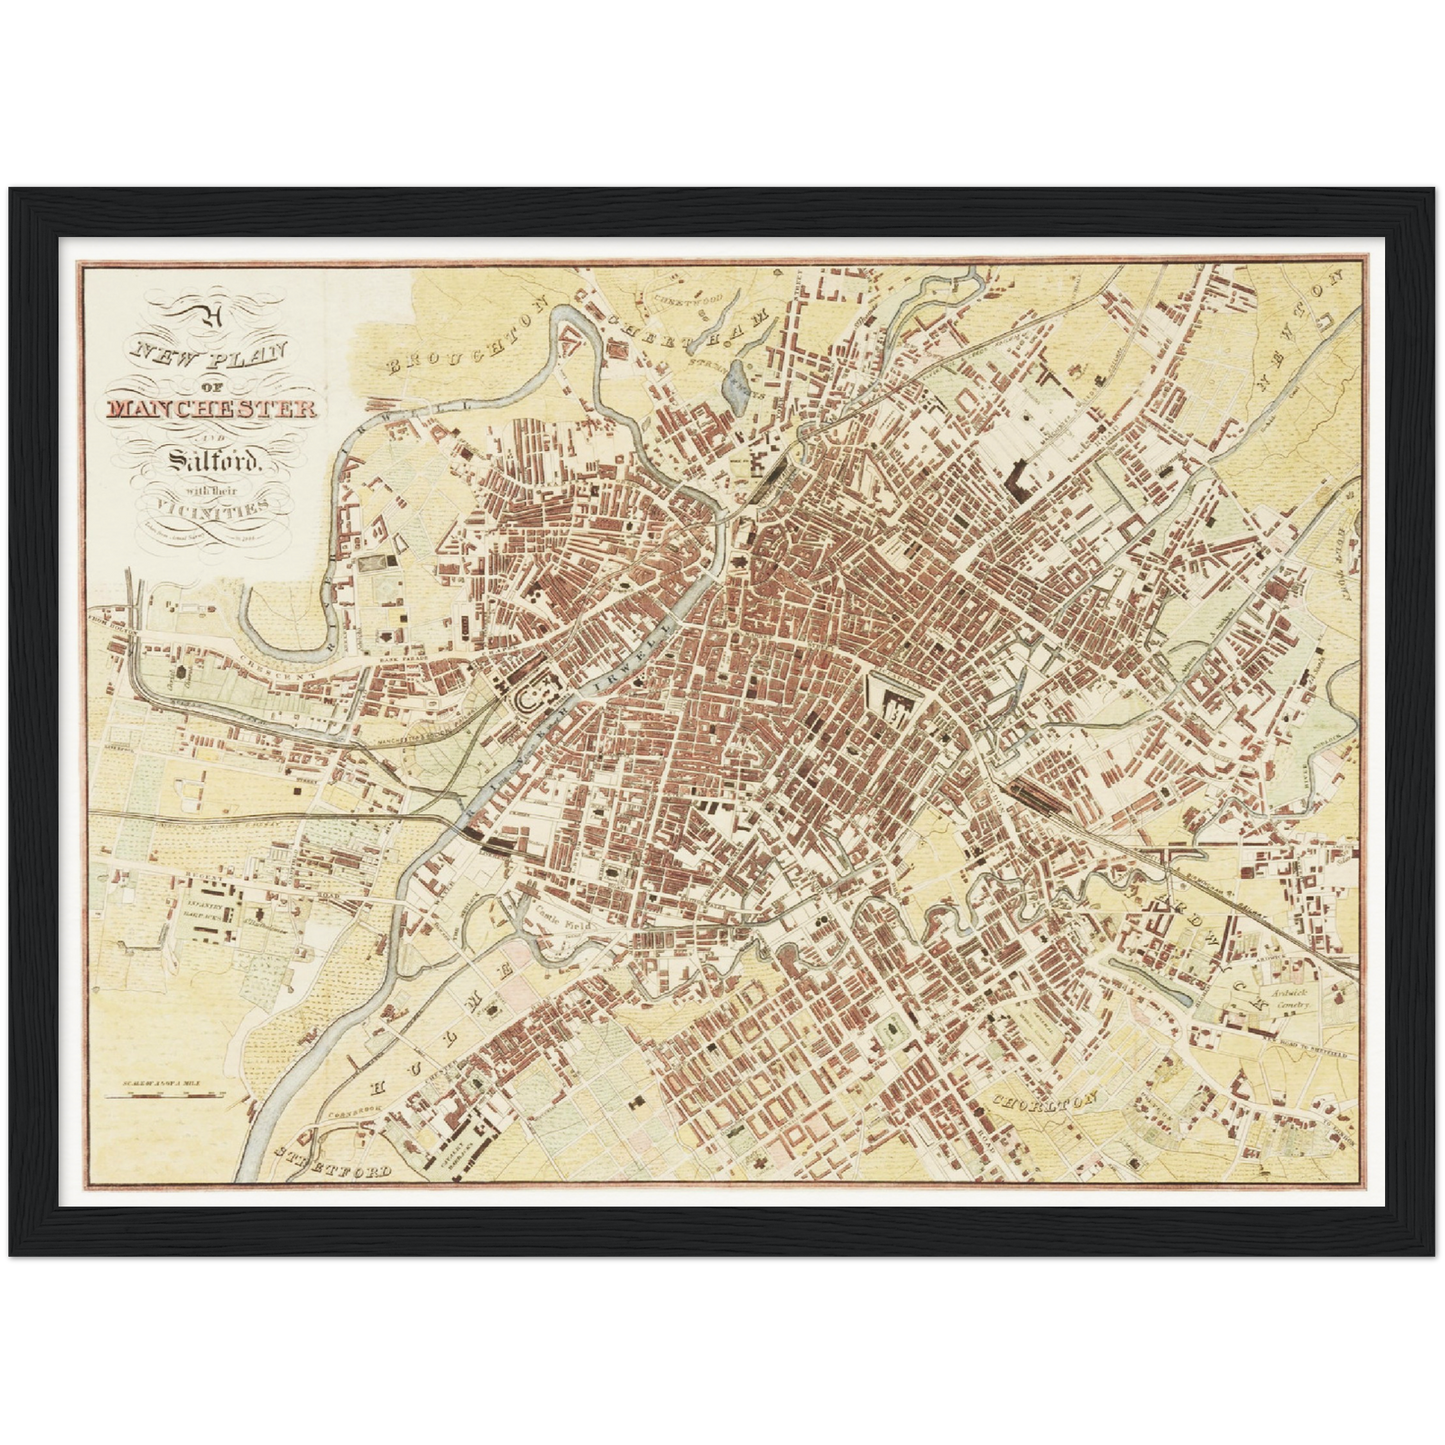 Historischer Stadtplan Manchester um 1844